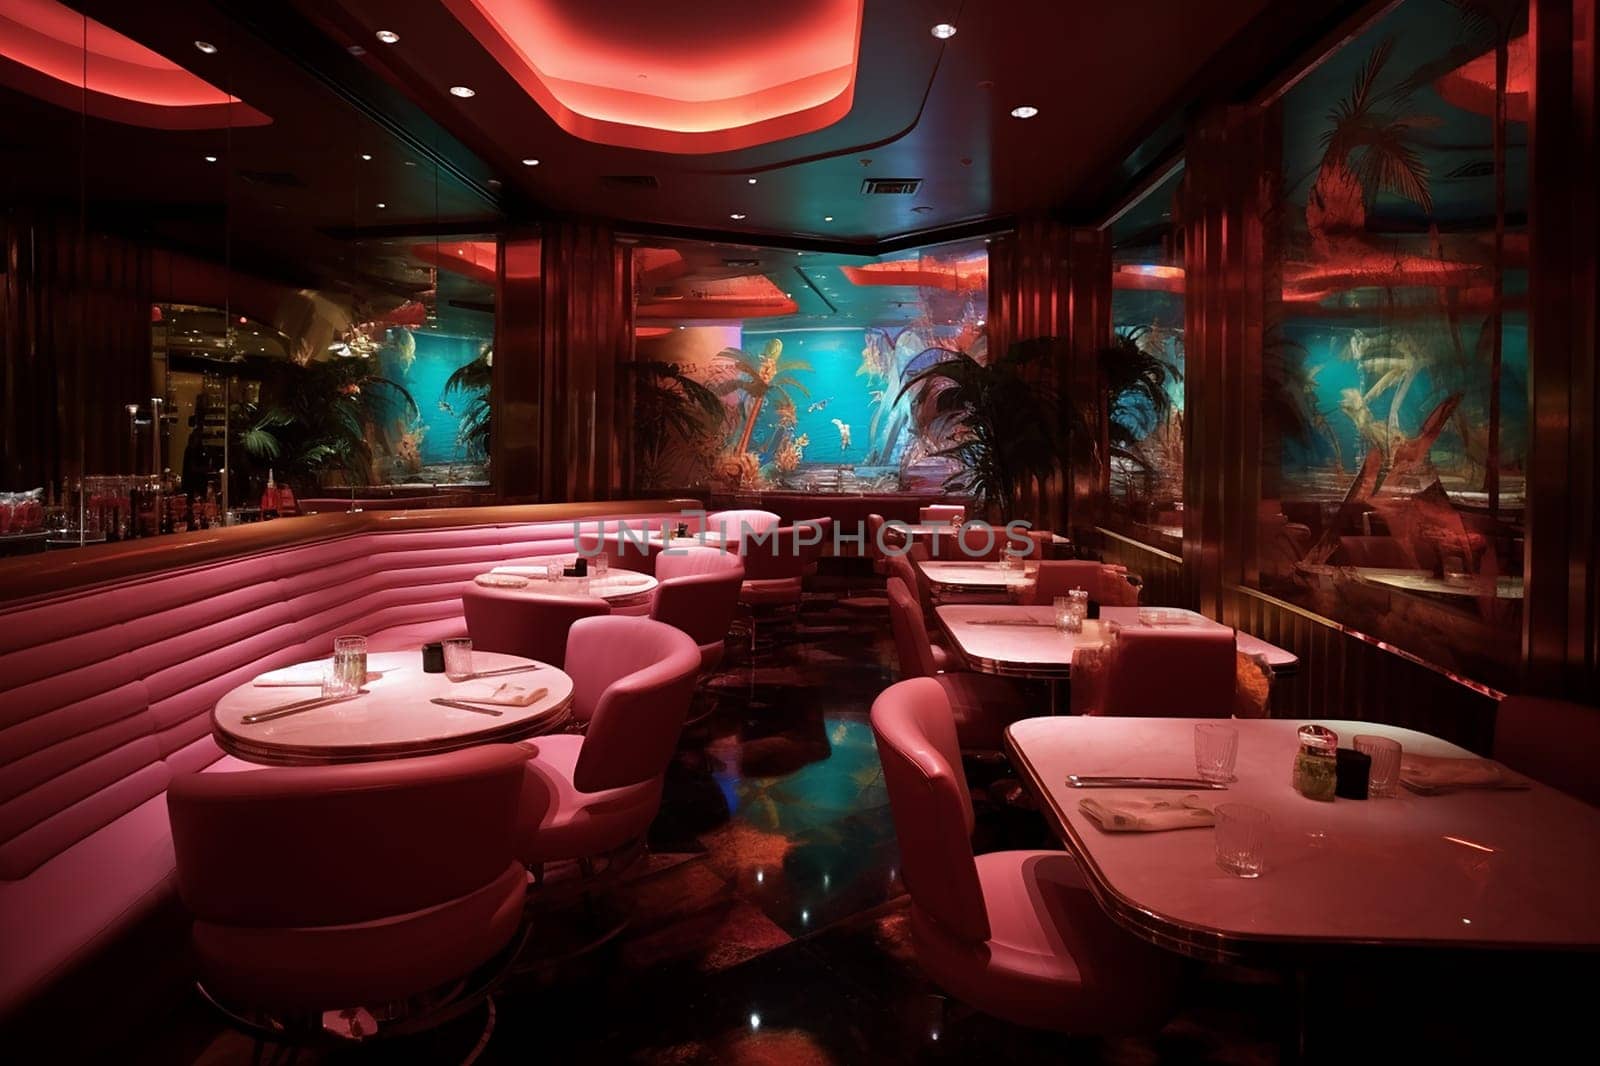 Elegant restaurant interior with modern lighting and stylish decor by Hype2art